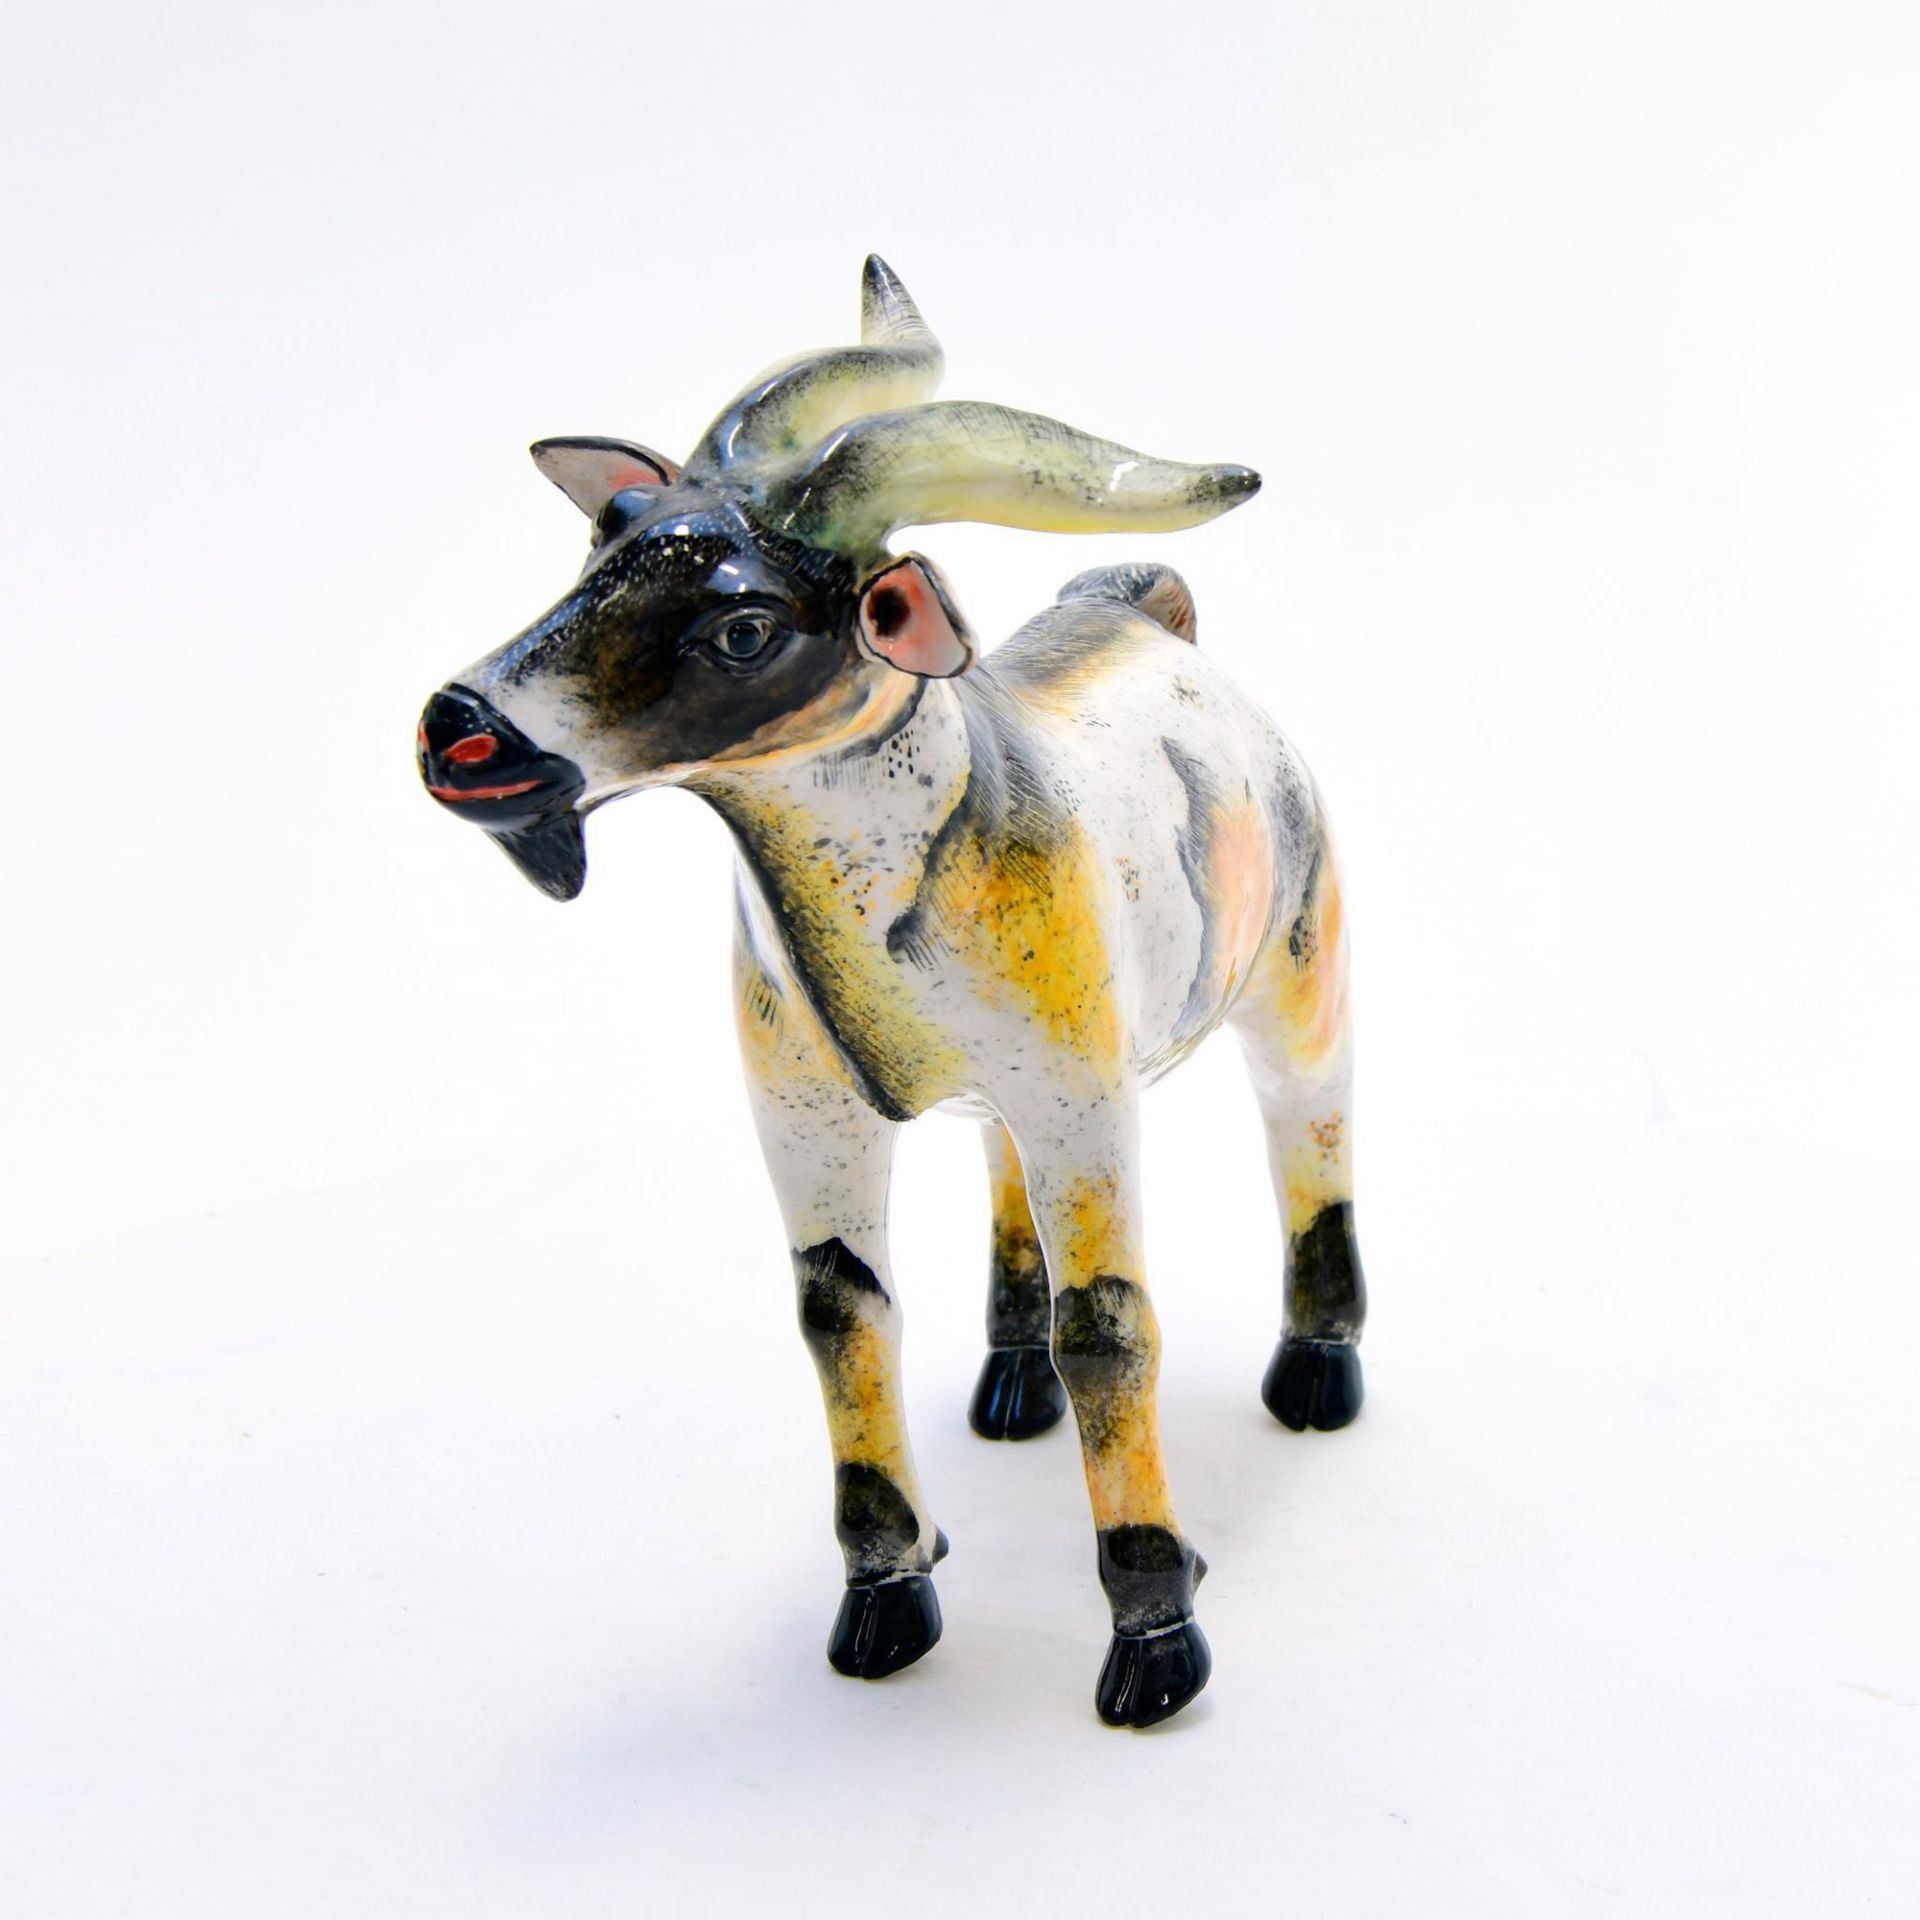 Goat Sculpture by Ardmore Ceramics - Image 5 of 5